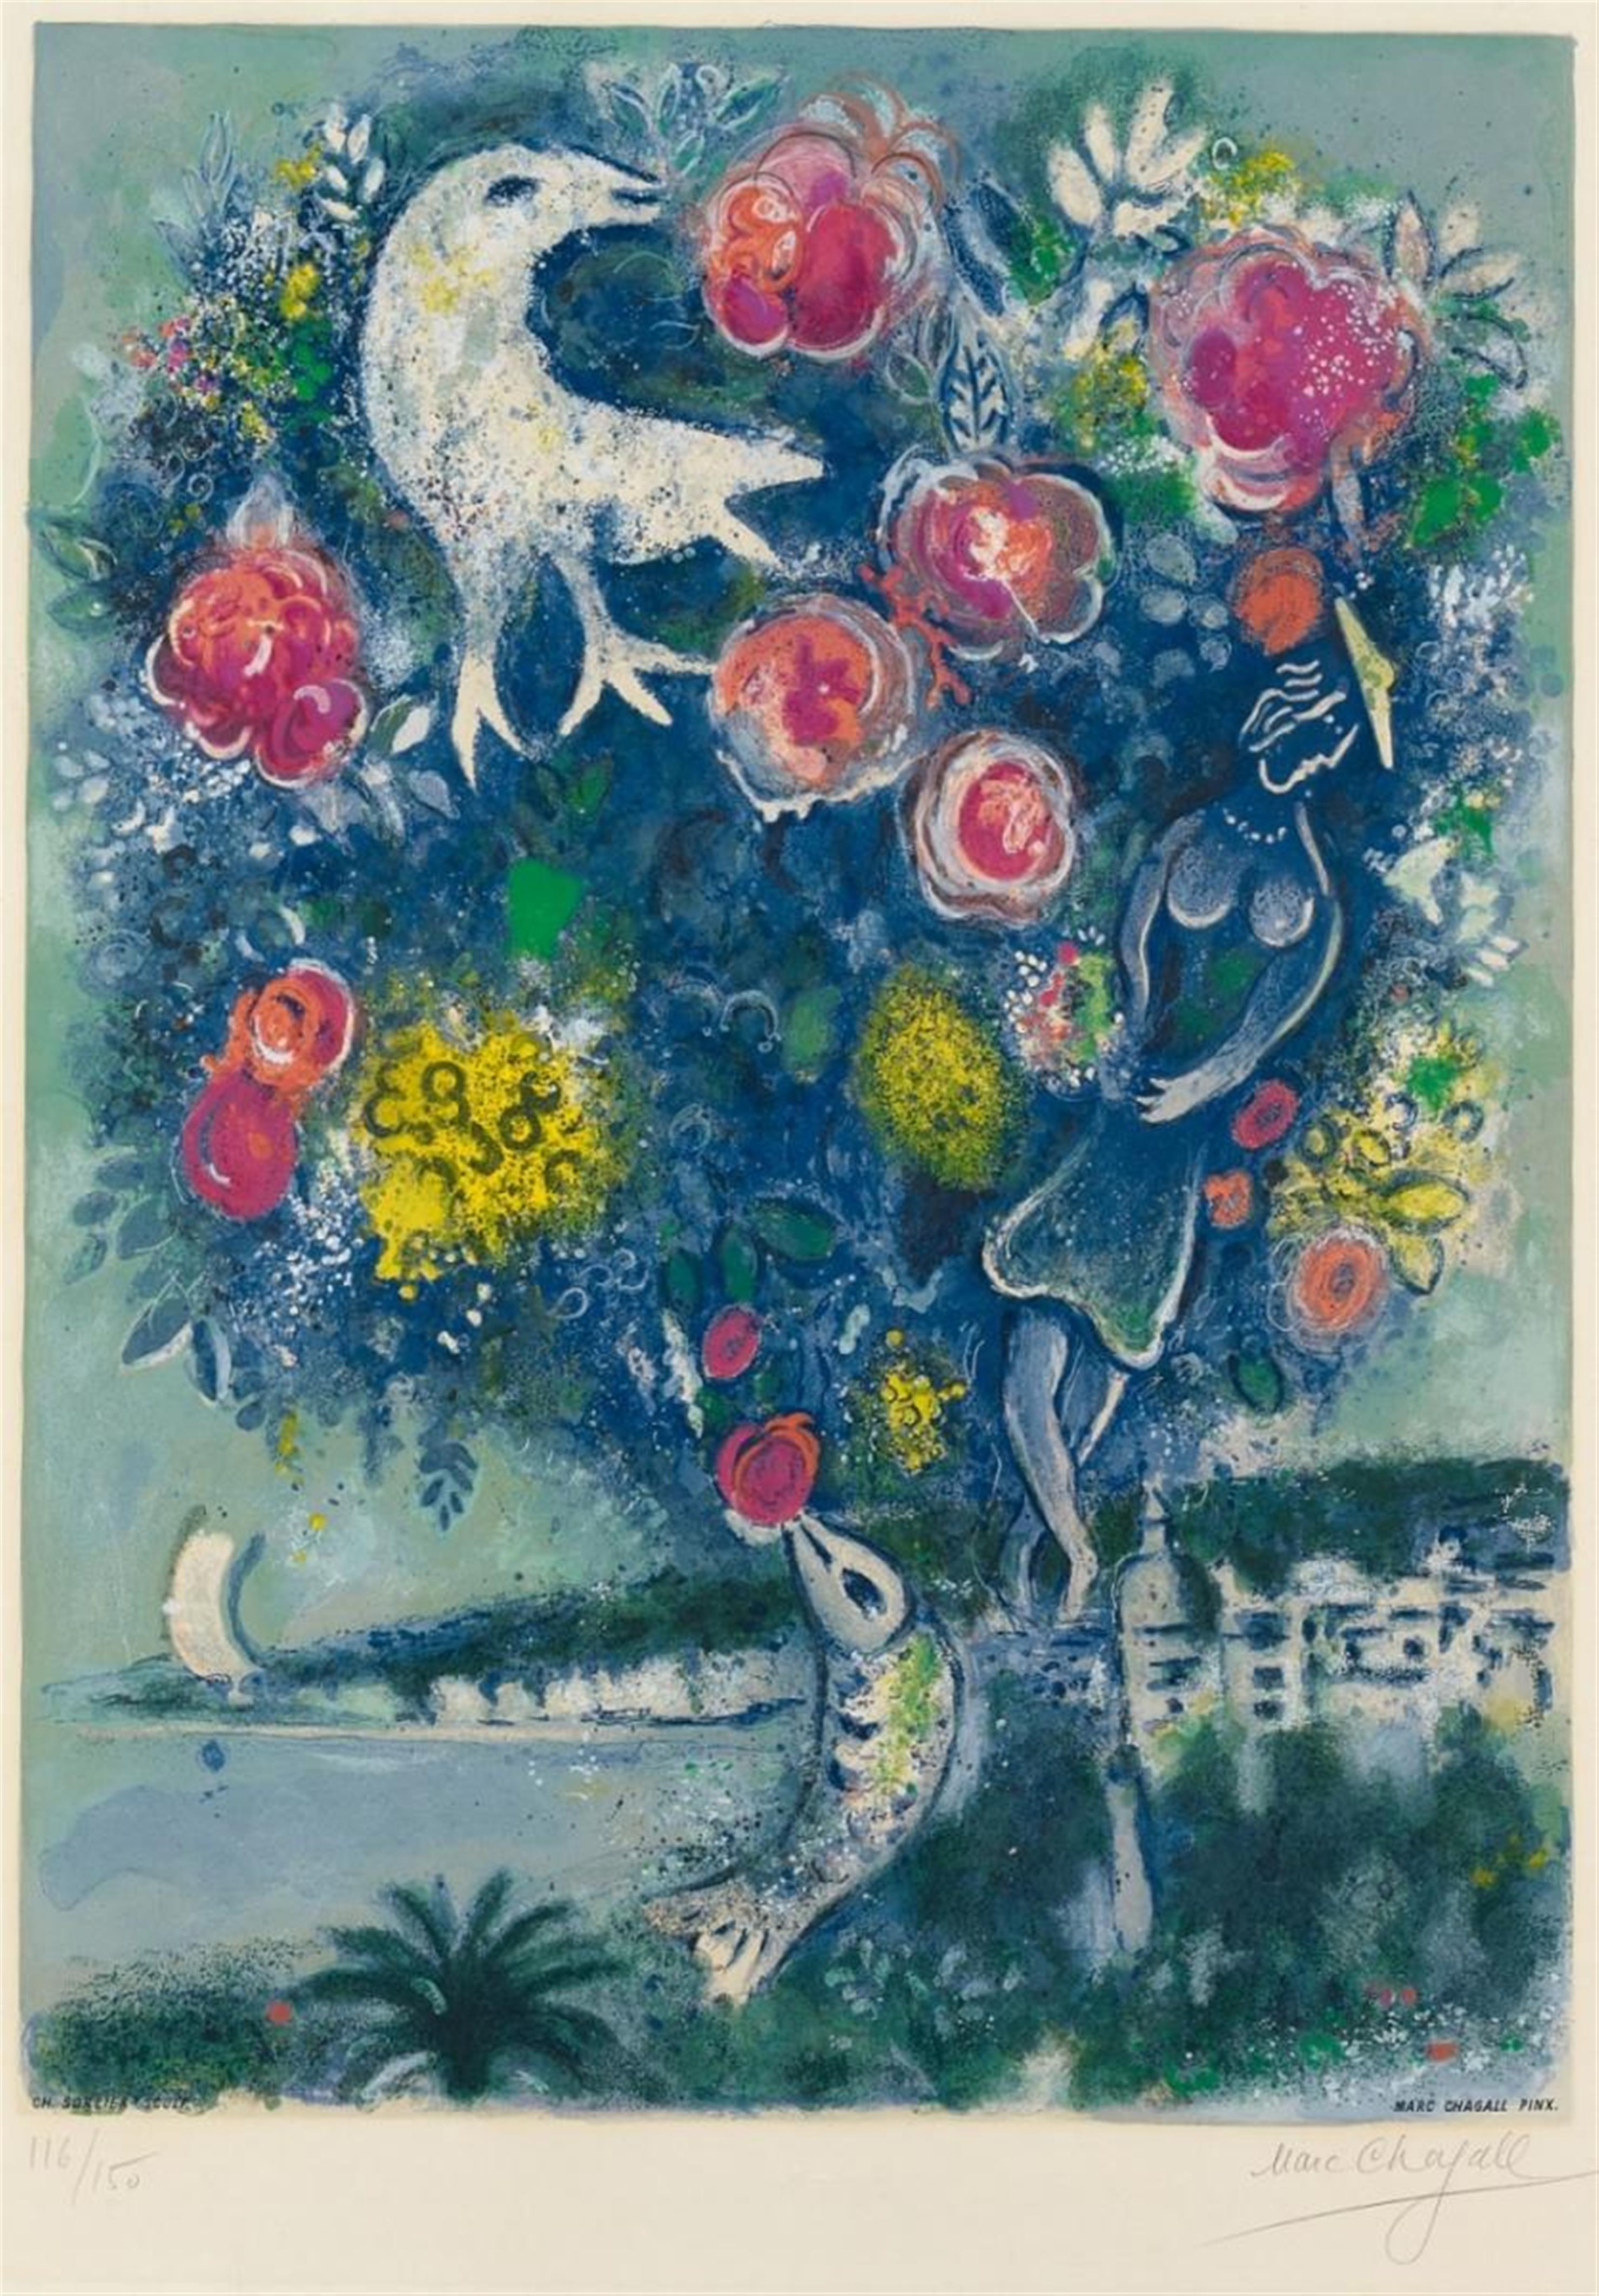 Nach Marc Chagall - La Baie des Anges au Bouquet de Roses (Engelsbucht mit Rosenstrauss) - image-1